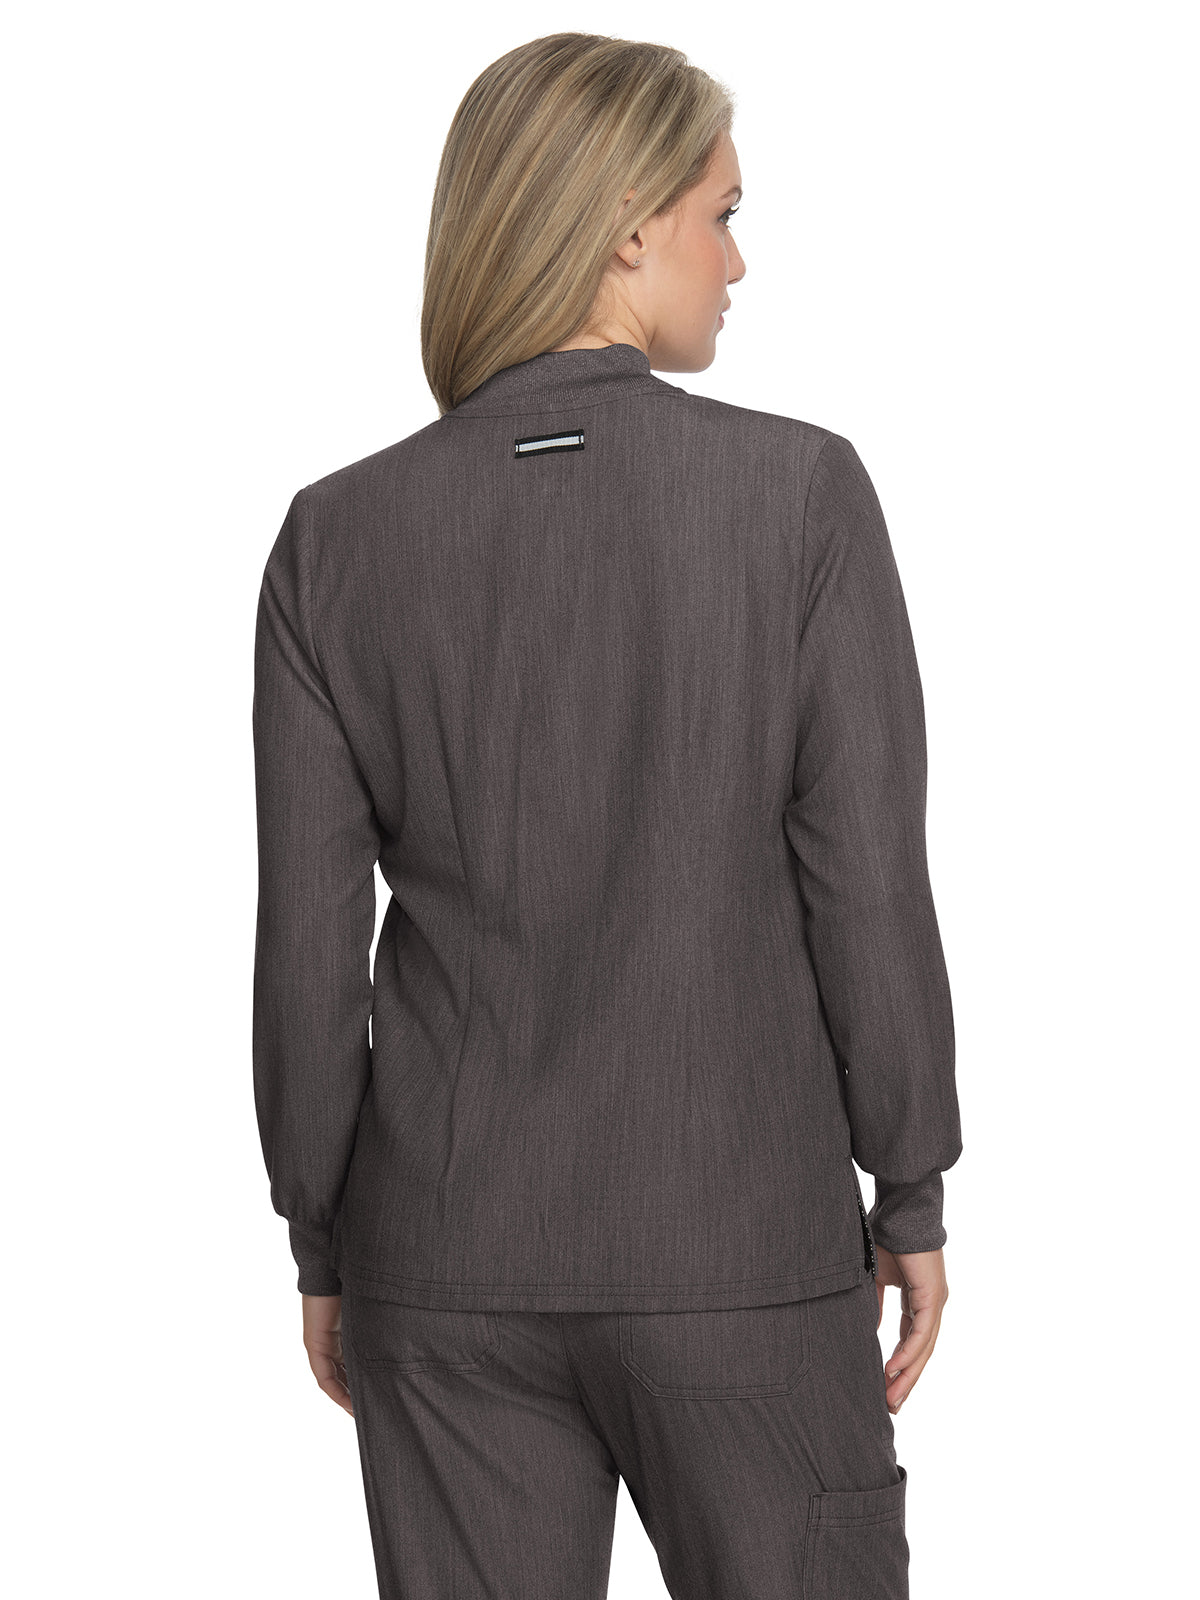 Women's Zipper Front Scrub Jacket